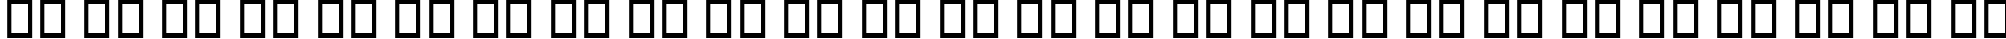 Пример написания английского алфавита шрифтом B Davat